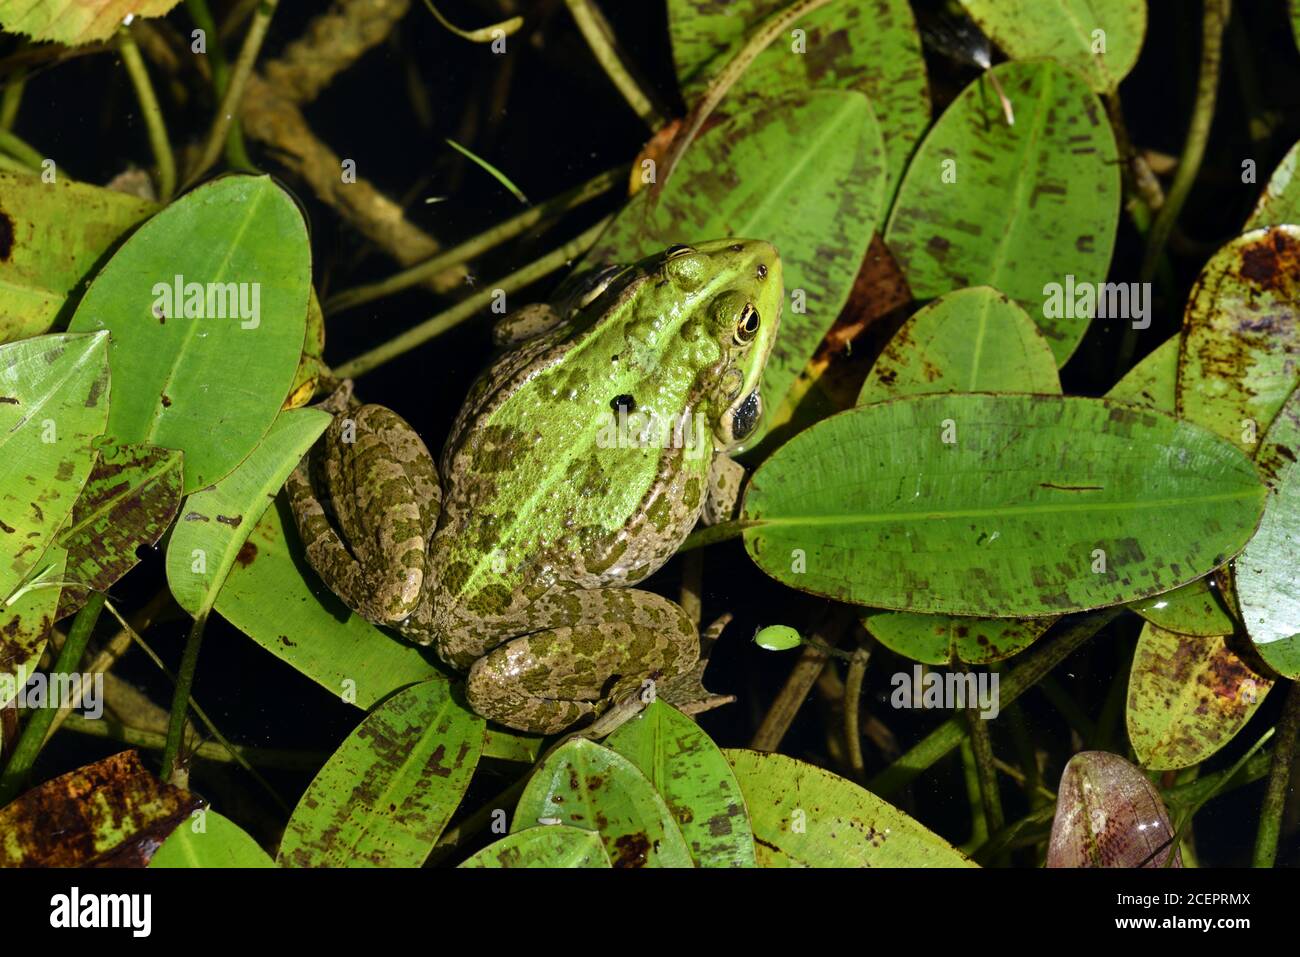 Common European Frog, Green Frog, Pond Frog or Edible Frog, Pelophylax kl. esculenta aka Rana esculenta in Garden Pond Stock Photo